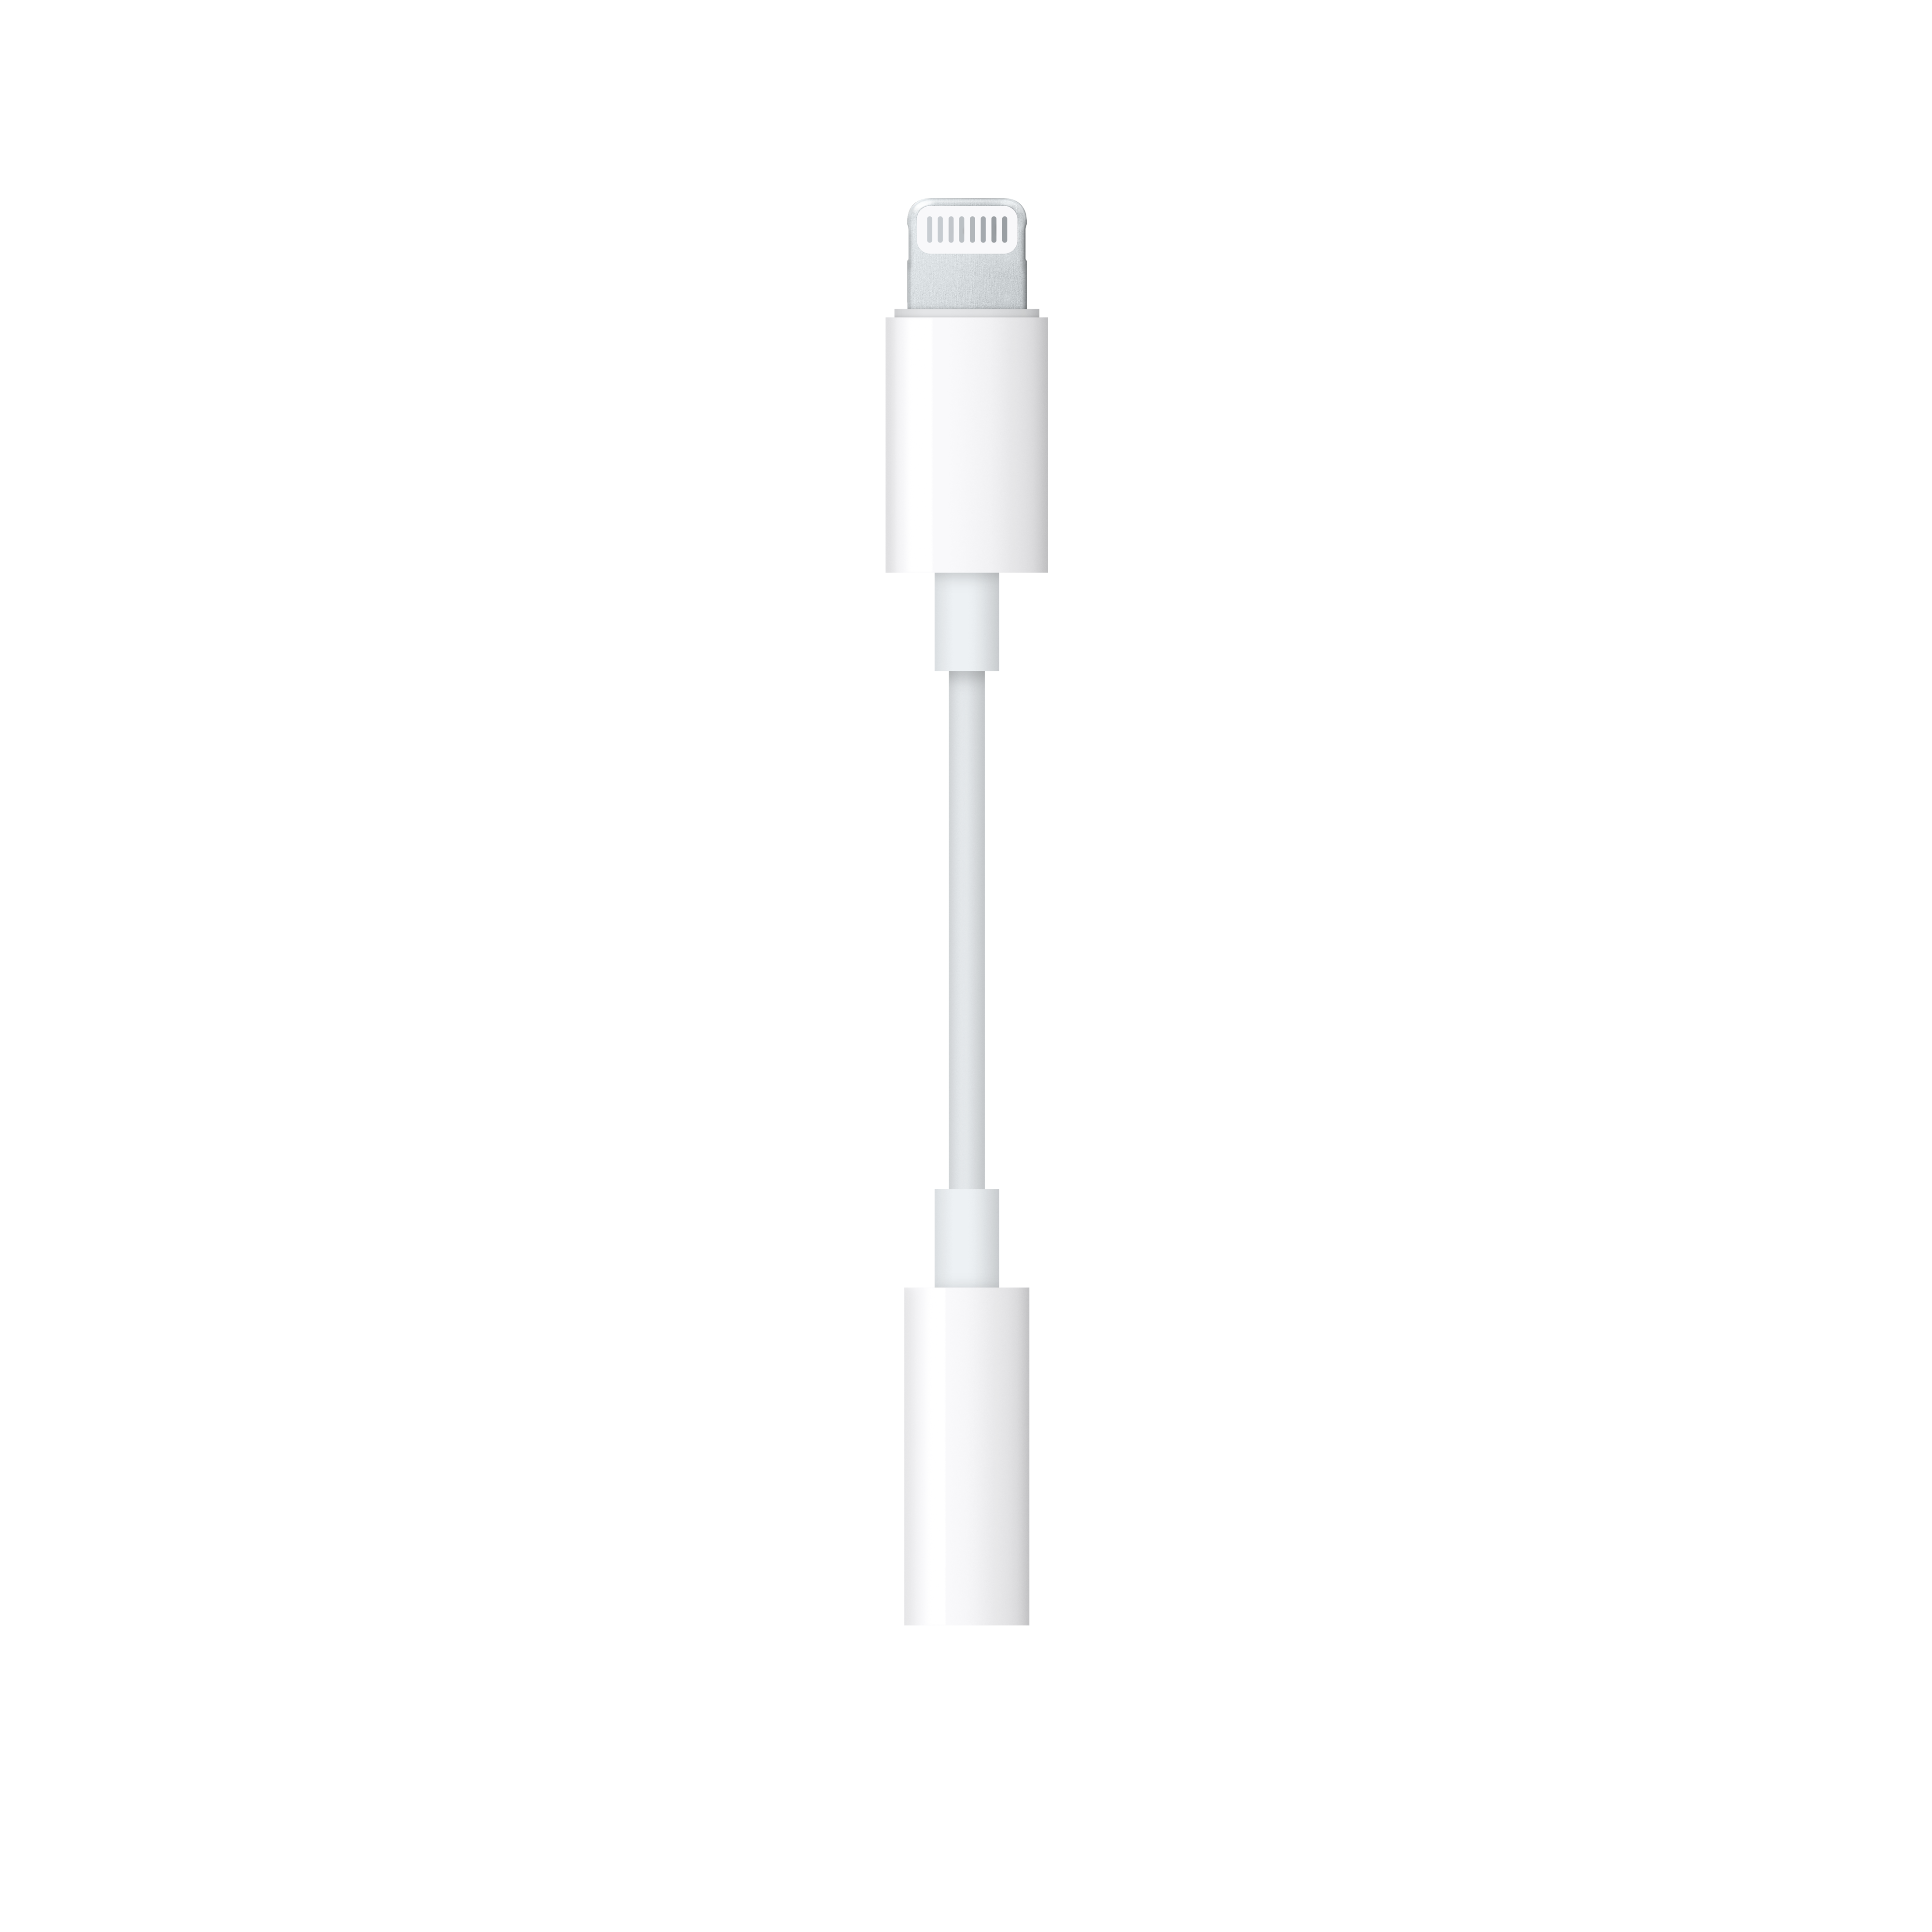 Адаптер apple lightning usb. Адаптер Apple Lightning Jack 3.5 мм. Apple переходник Lightning to 3.5mm. Адаптер Apple Lightning - Jack 3.5 мм mmx62zm/a. Переходник Apple mmx62zm/a, Lightning m Jack 3.5 f.